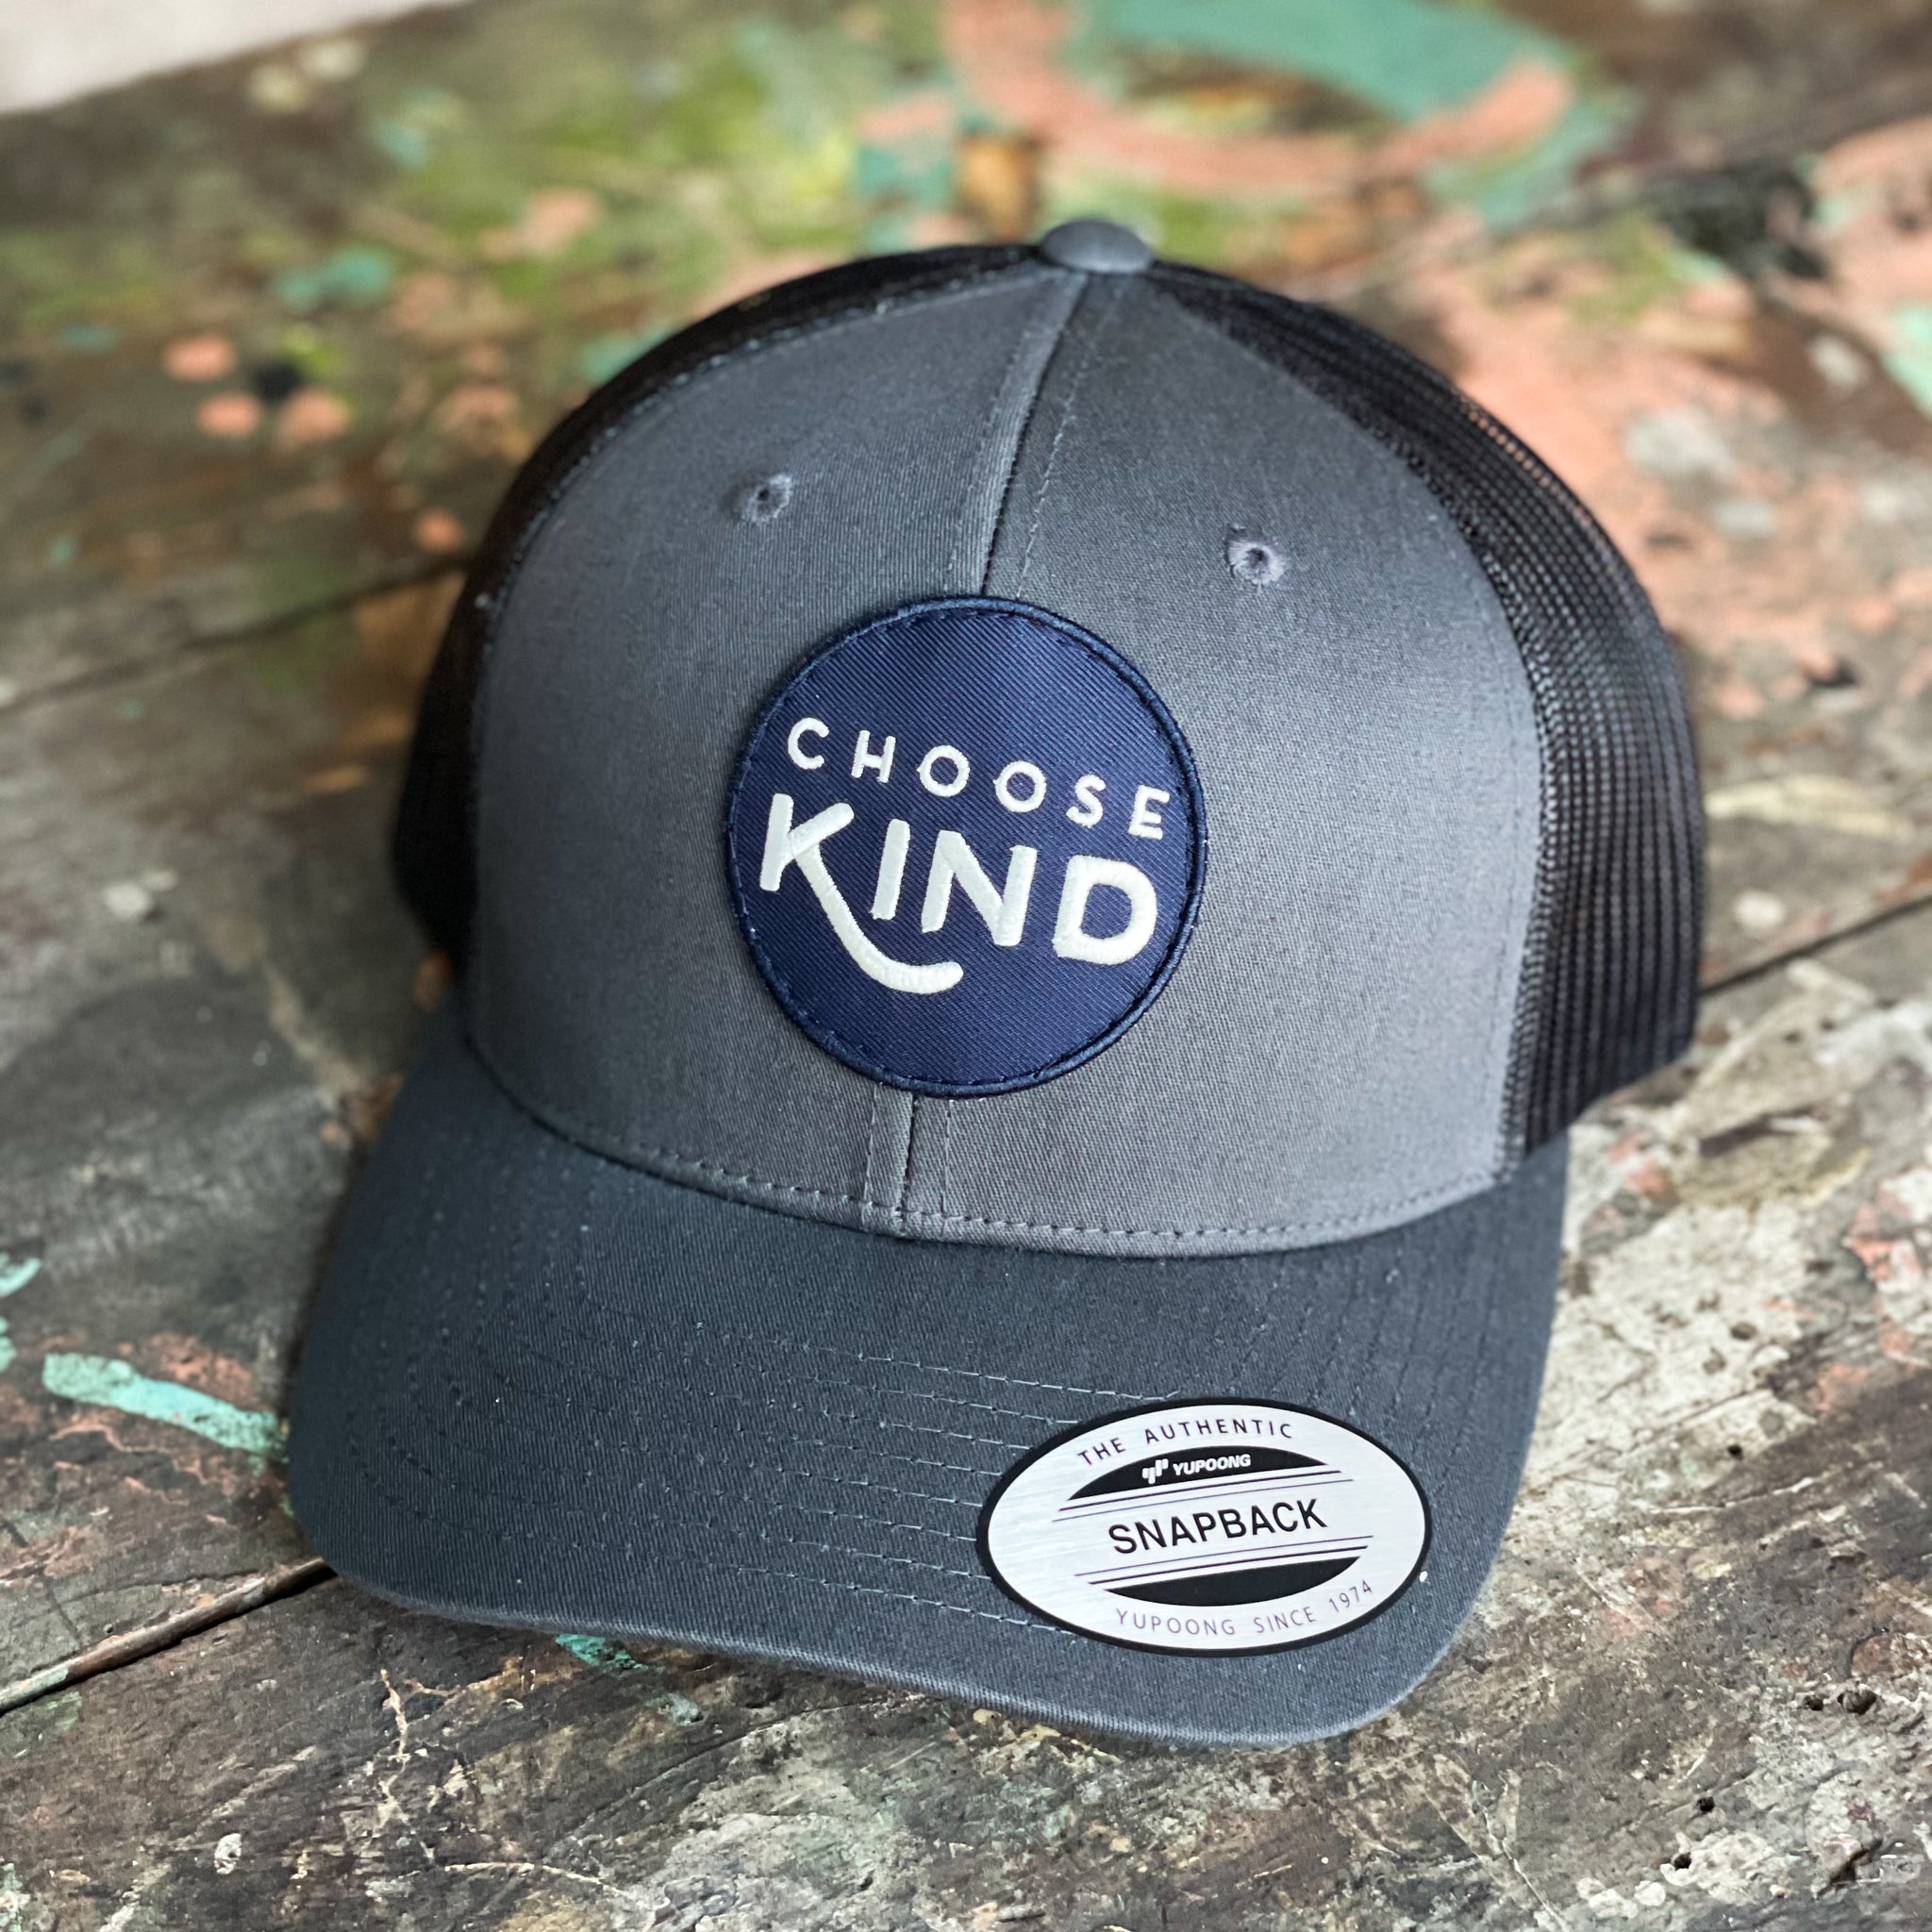 Choose kindness trucker style hat